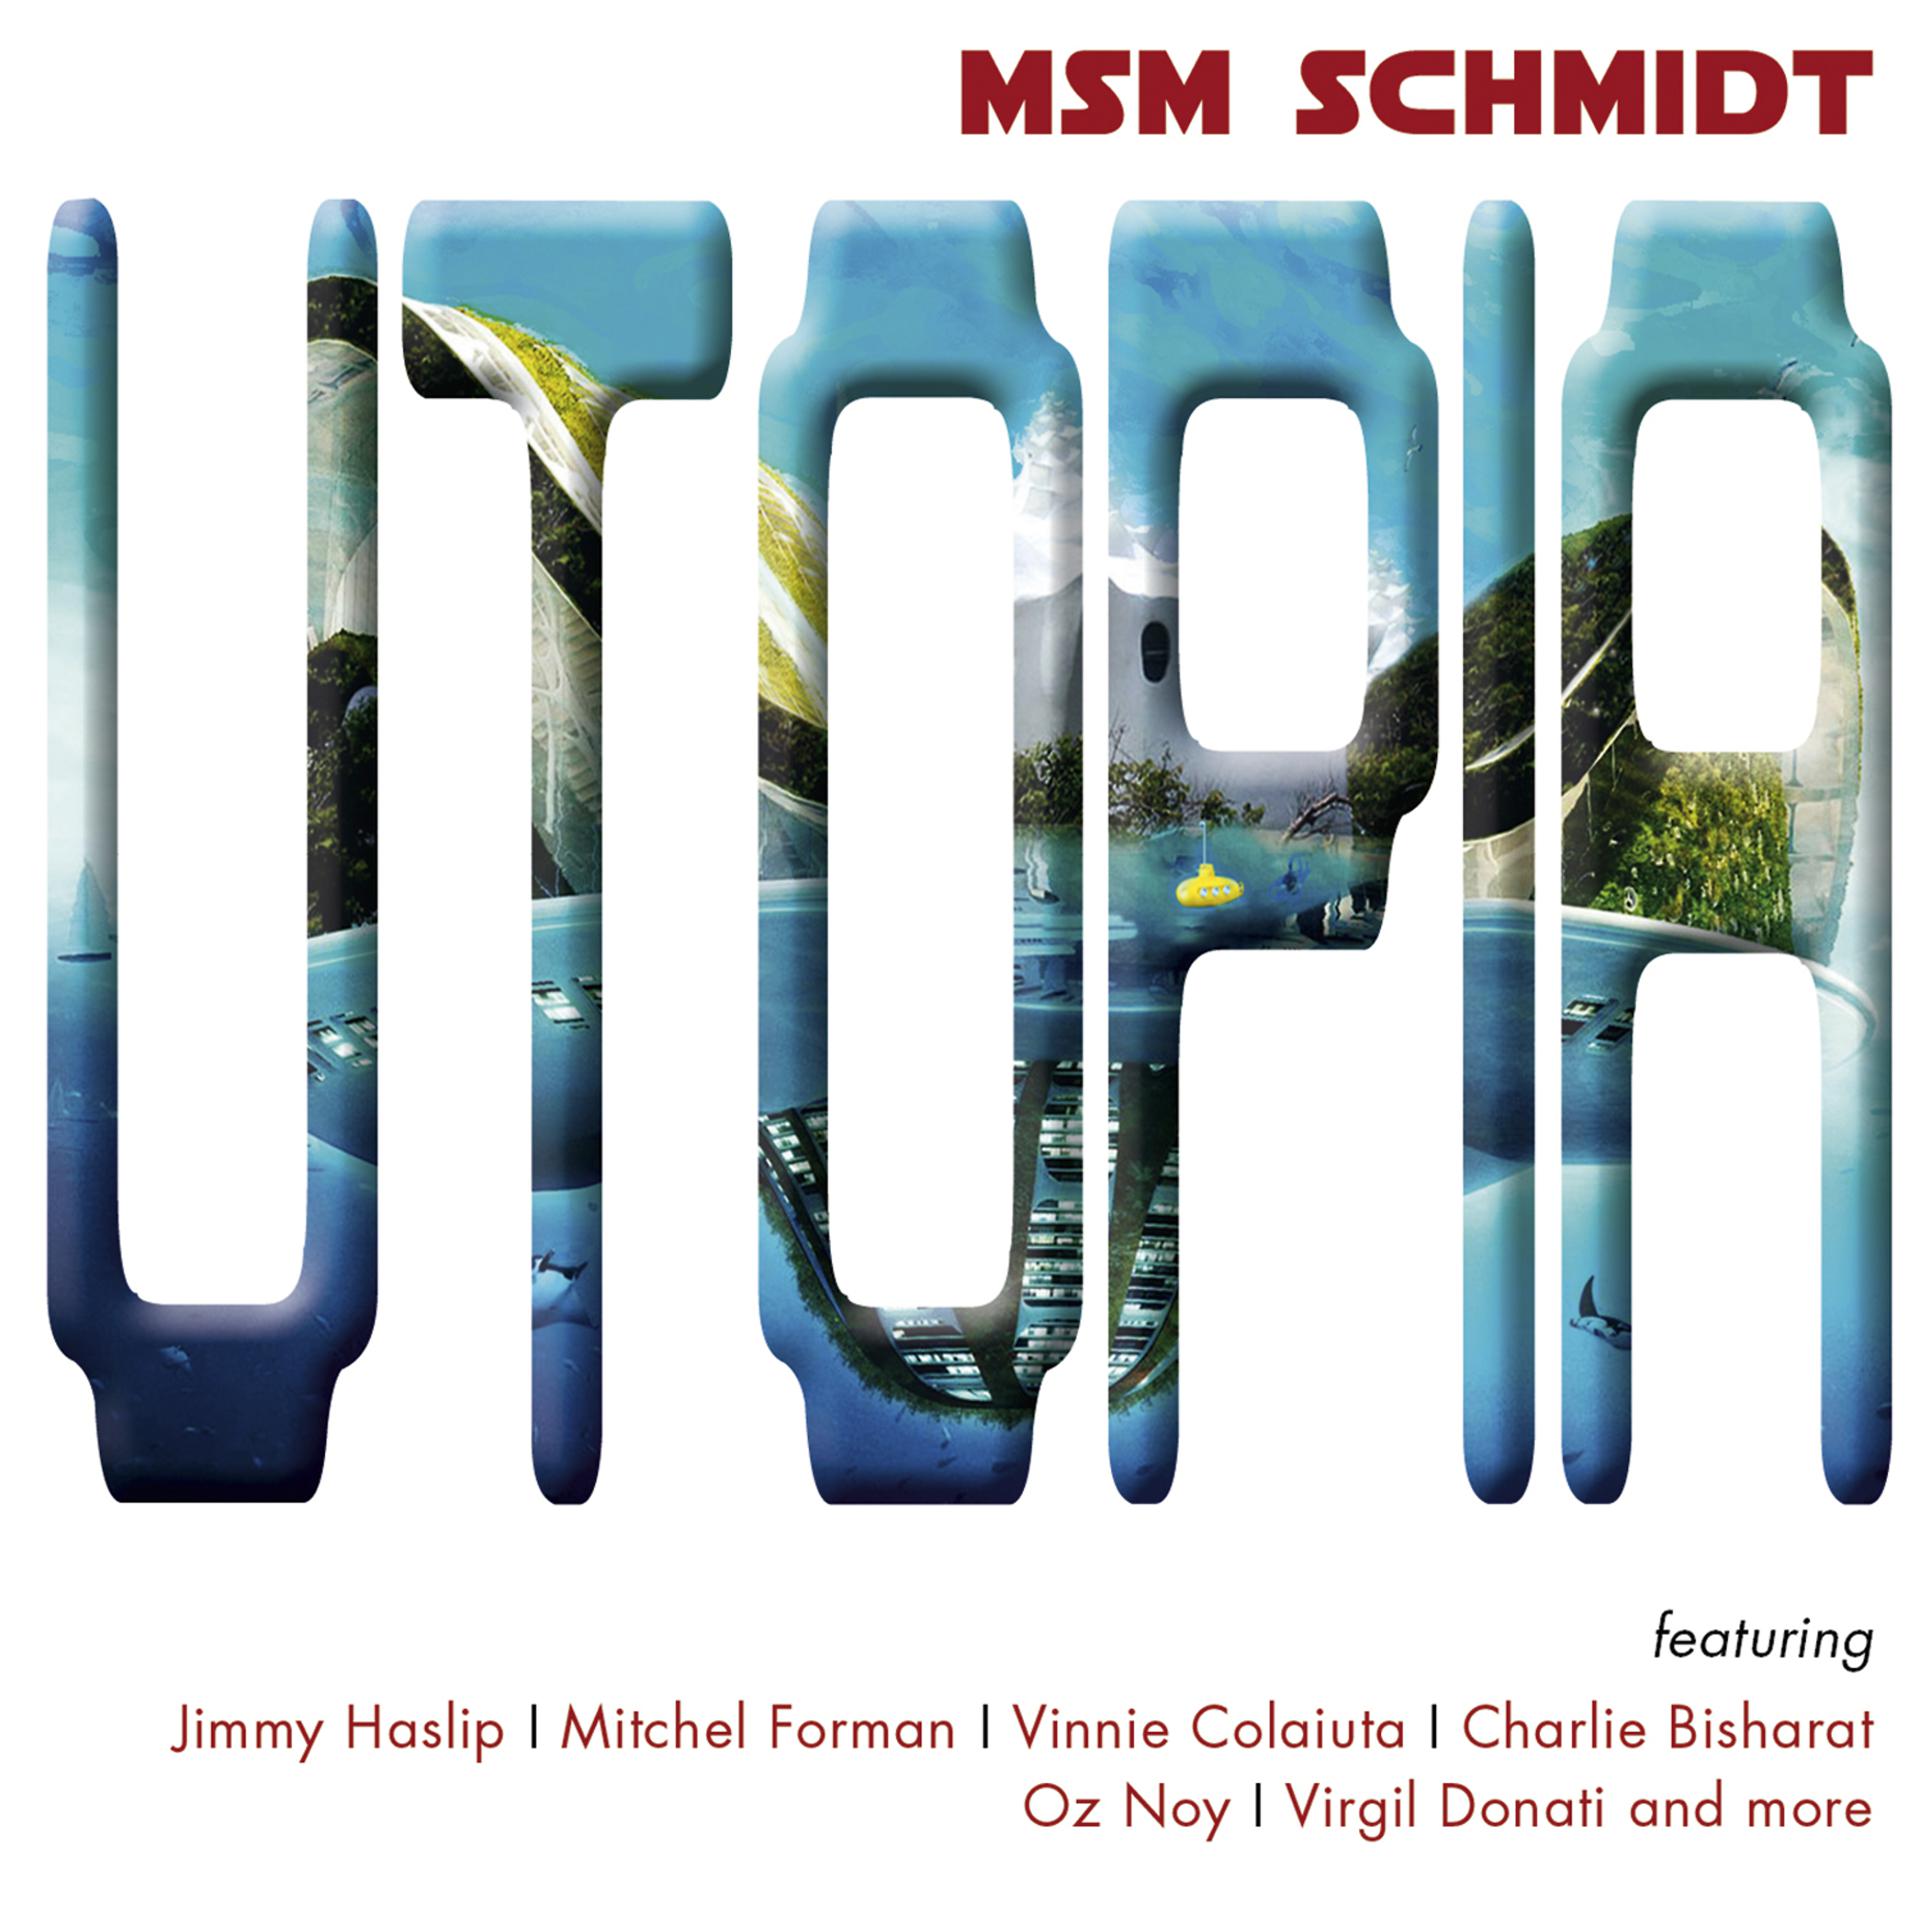 Постер к треку Vinnie Colaiuta, Jimmy Haslip, Brandon Fields, Oz Noy, Mitchel Forman, MSM Schmidt - Orbit